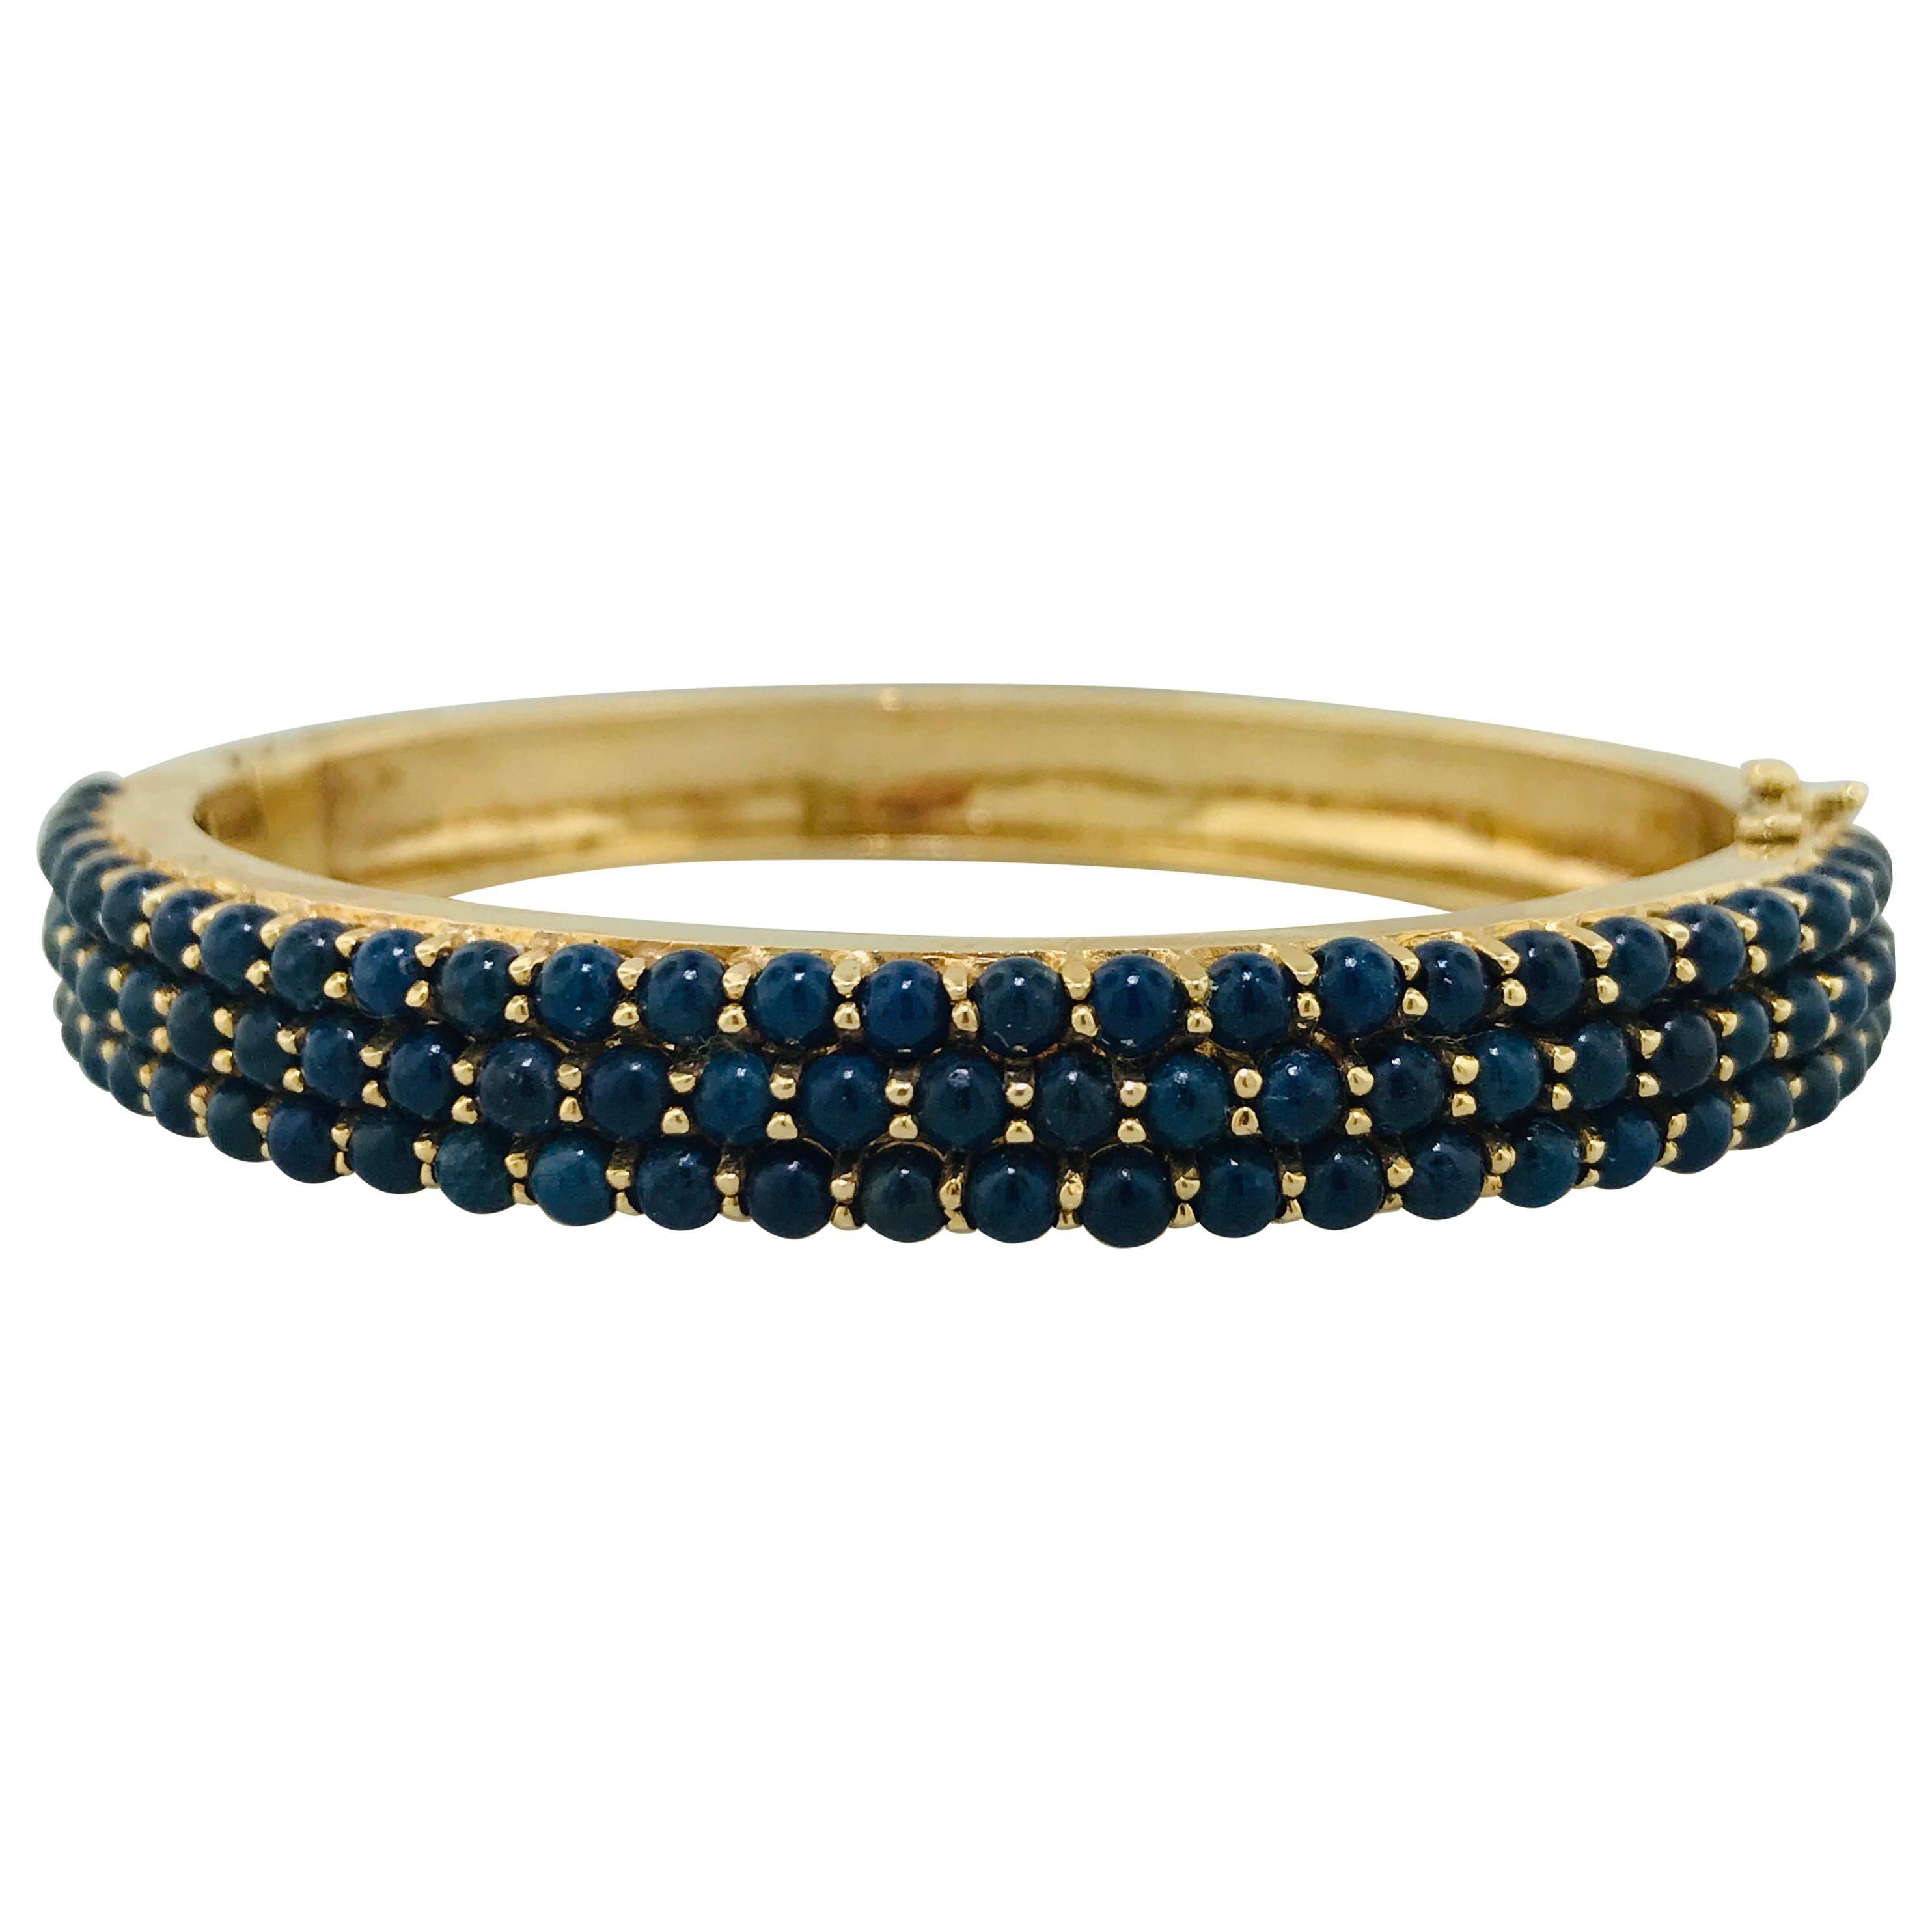 Blue Lapis Bangle Bracelet in 14 Karat Solid Gold 8.5 MM Wide Fits 7.5 In Wrist